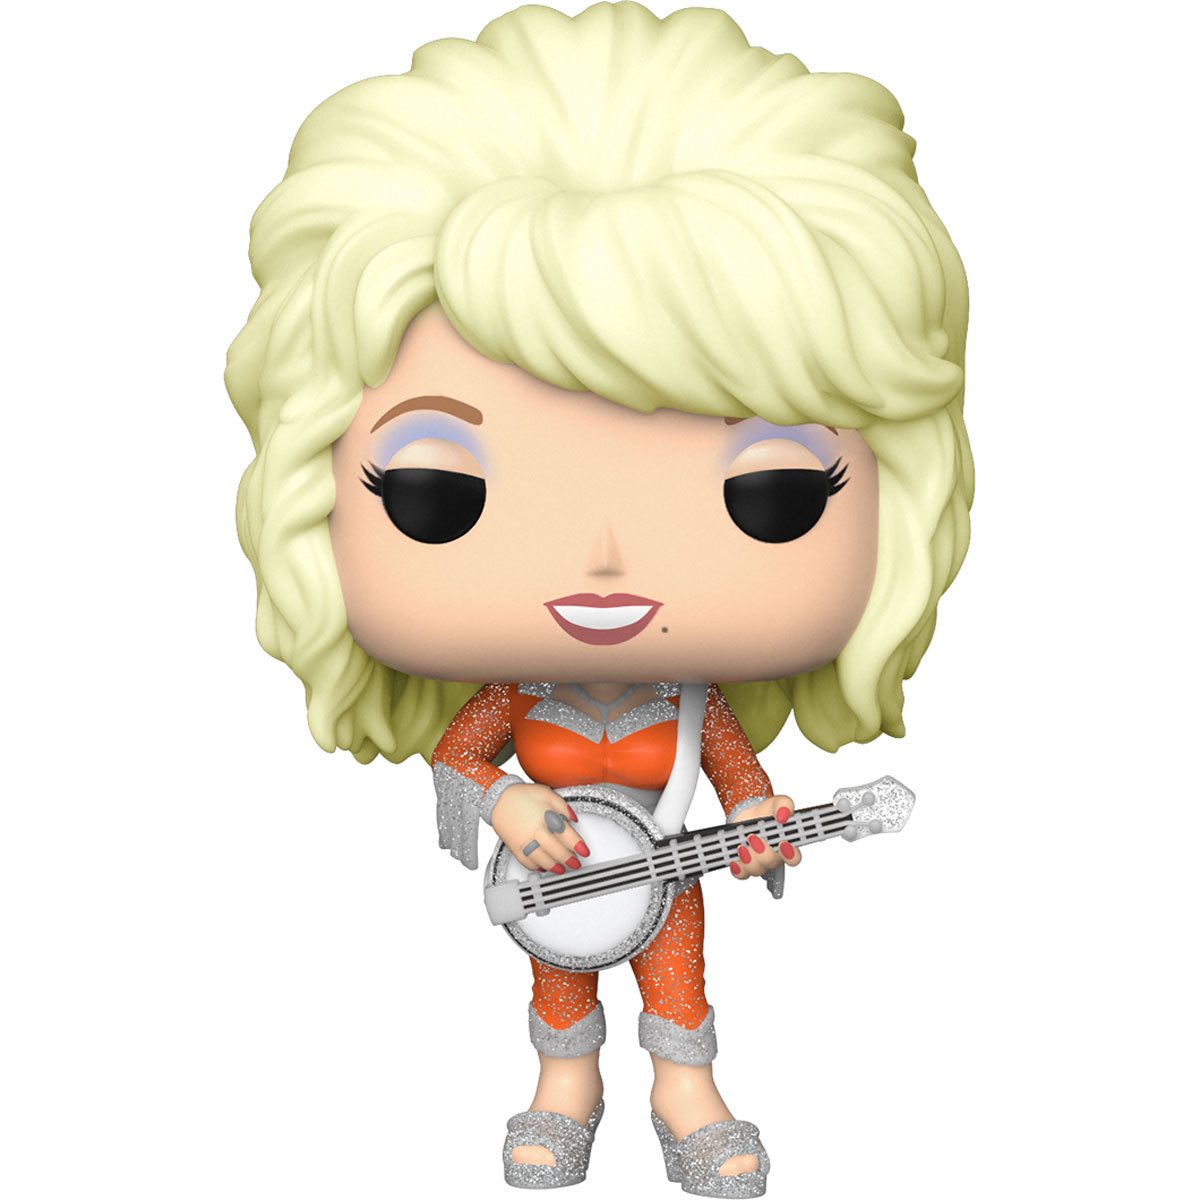 Funko Pop Rocks: Dolly Parton